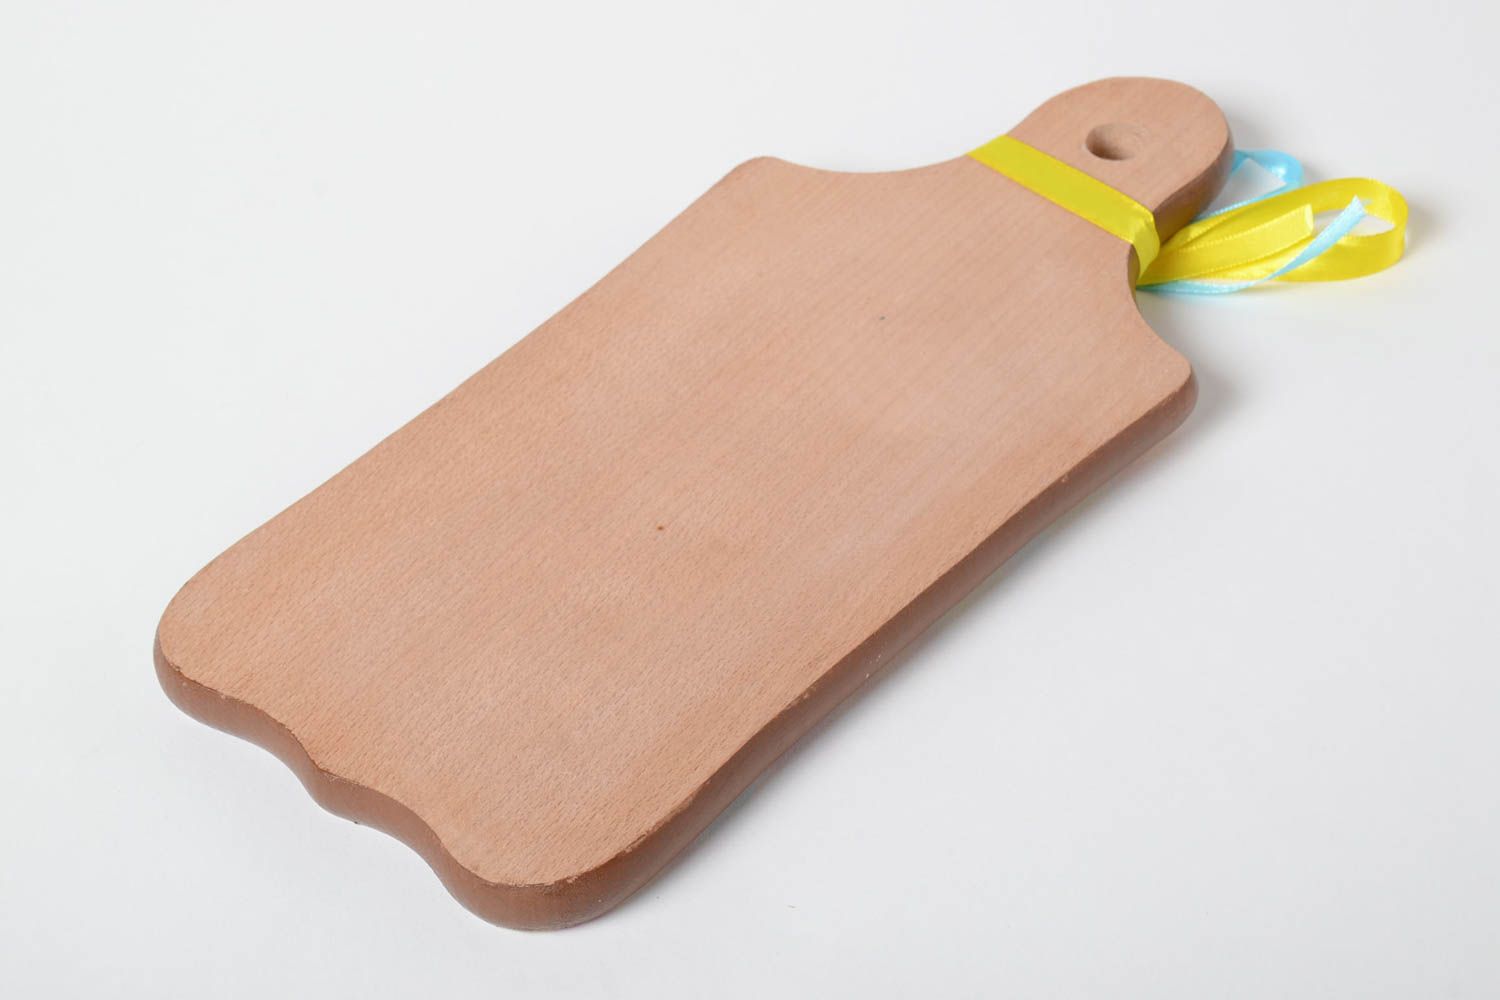 Handmade decoupage wooden chopping board beautiful kitchen accessory gift ideas photo 3